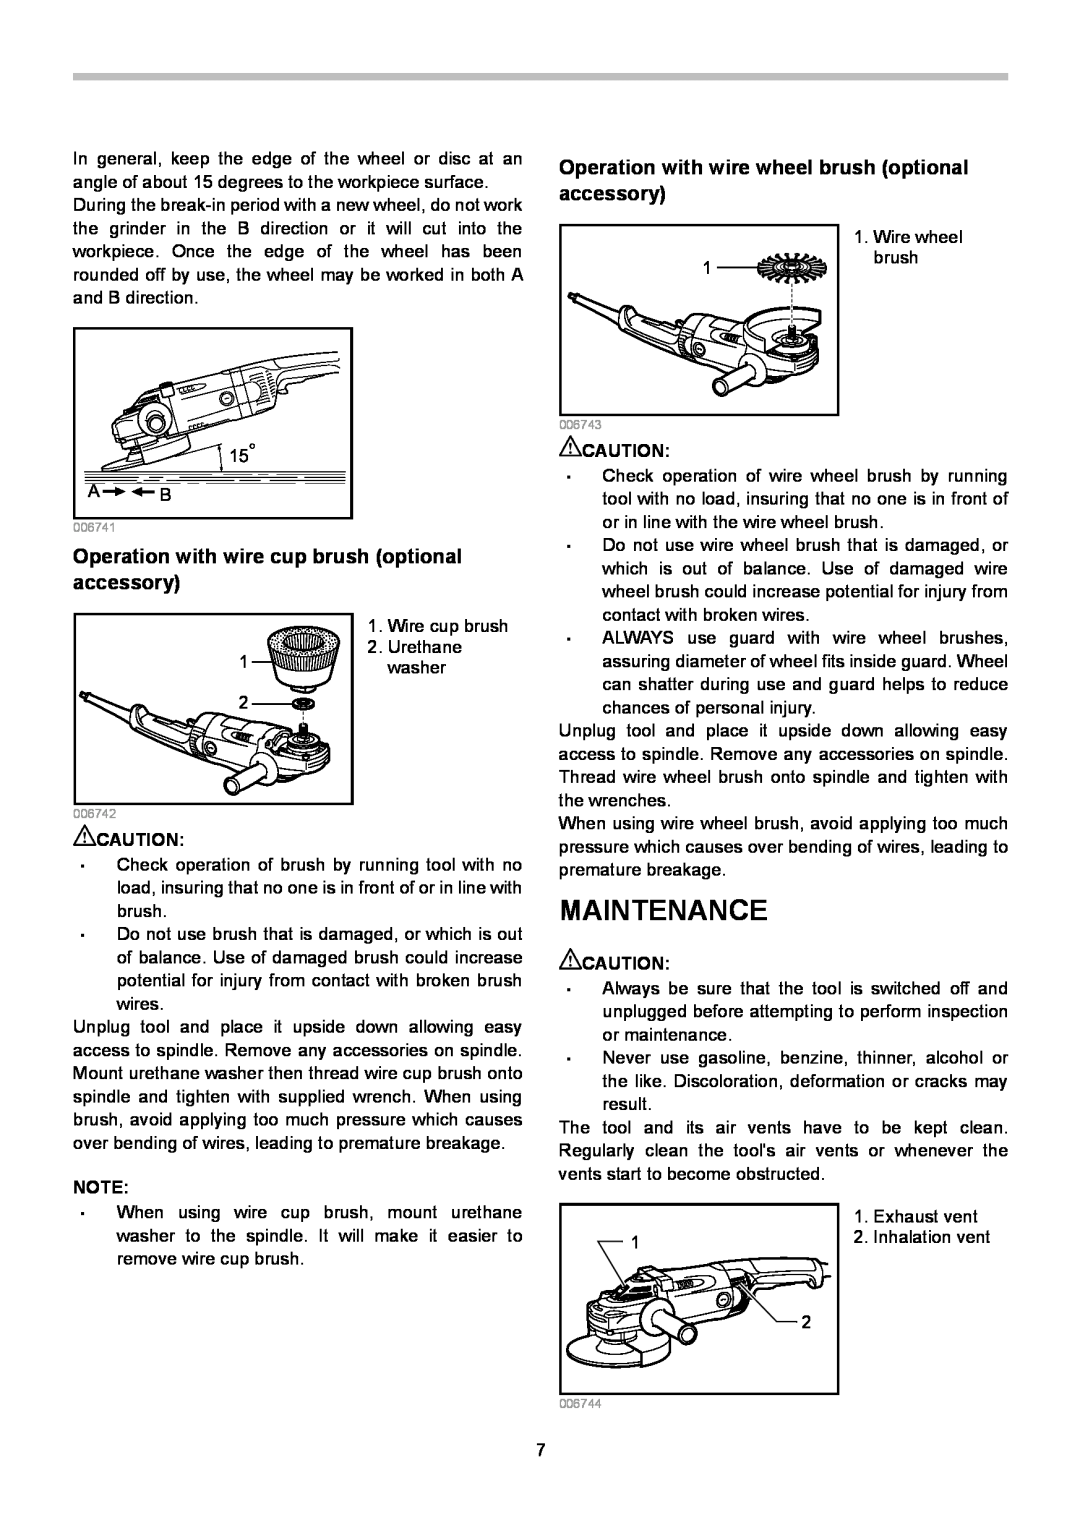 Makita GA7021, GA7020, GA9020 instruction manual Maintenance, Operation with wire cup brush optional accessory 